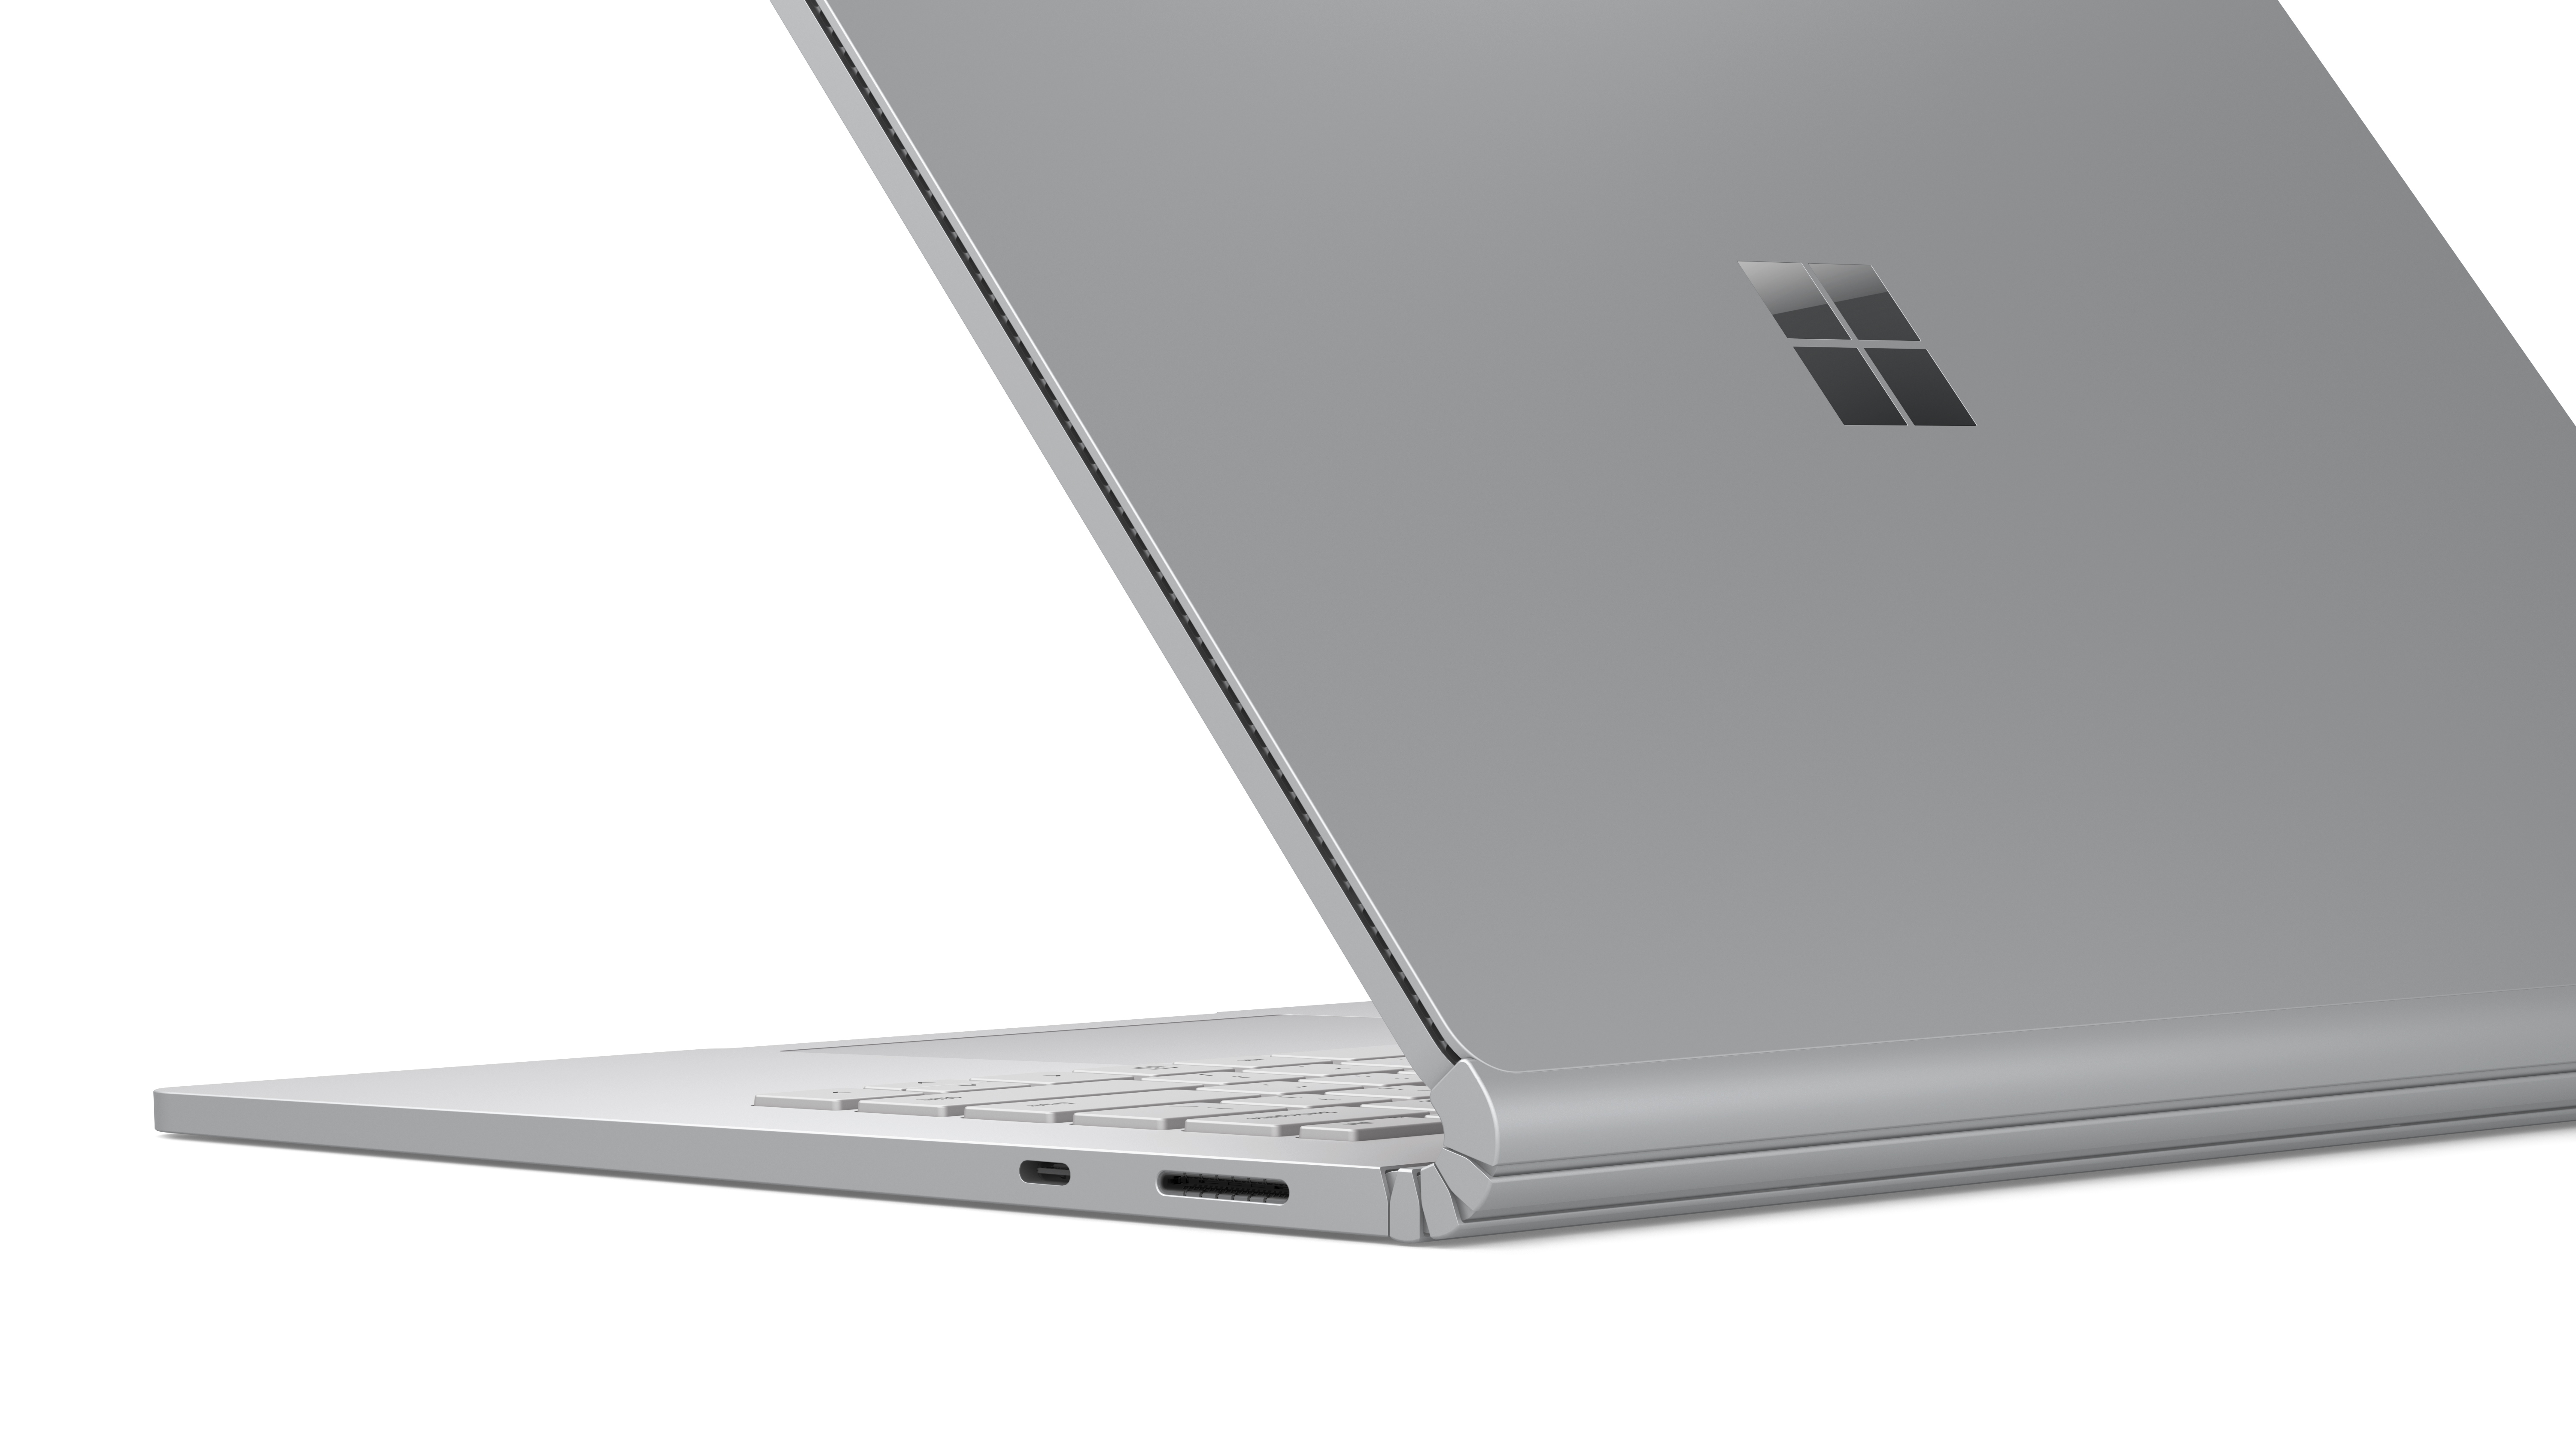 Microsoft Surface Book 3, 13" Touchscreen Laptop, Intel Core i5, 8GB RAM, 256GB SSD, Windows 10, Platinum, V6F-00001 - image 4 of 9